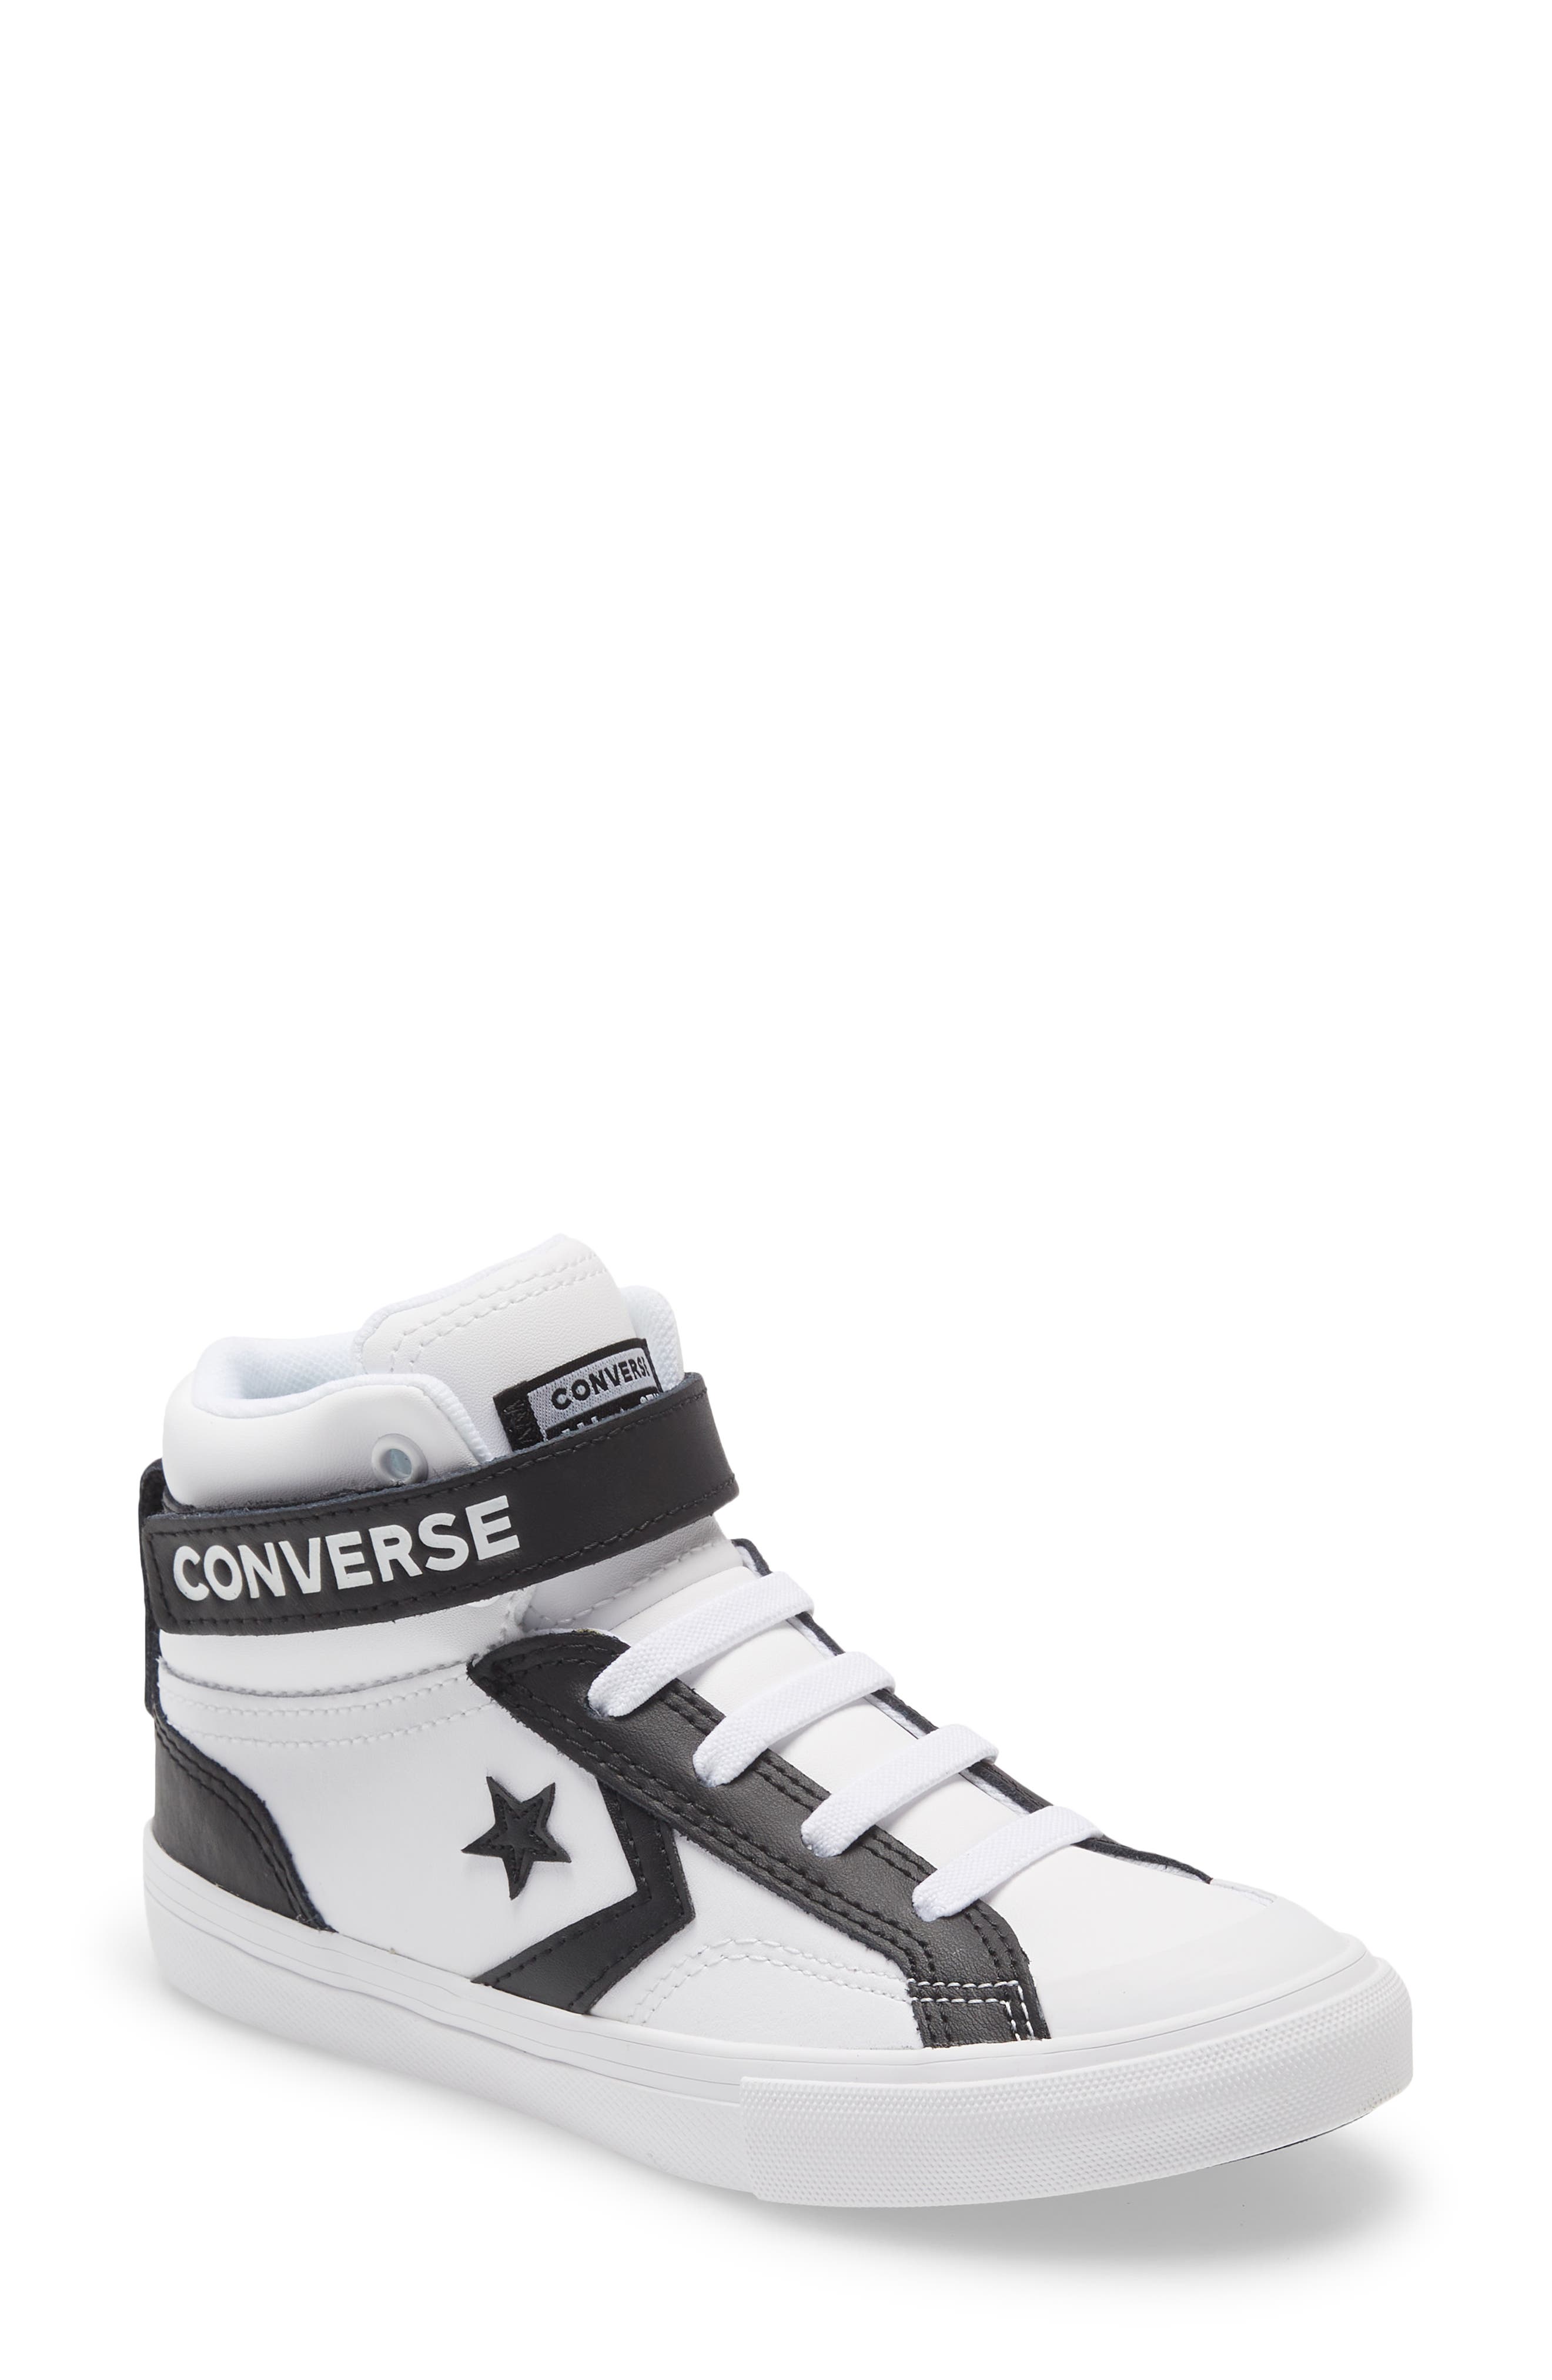 Converse All Star(R) Pro Blaze Hi Sneaker in White/Black/White